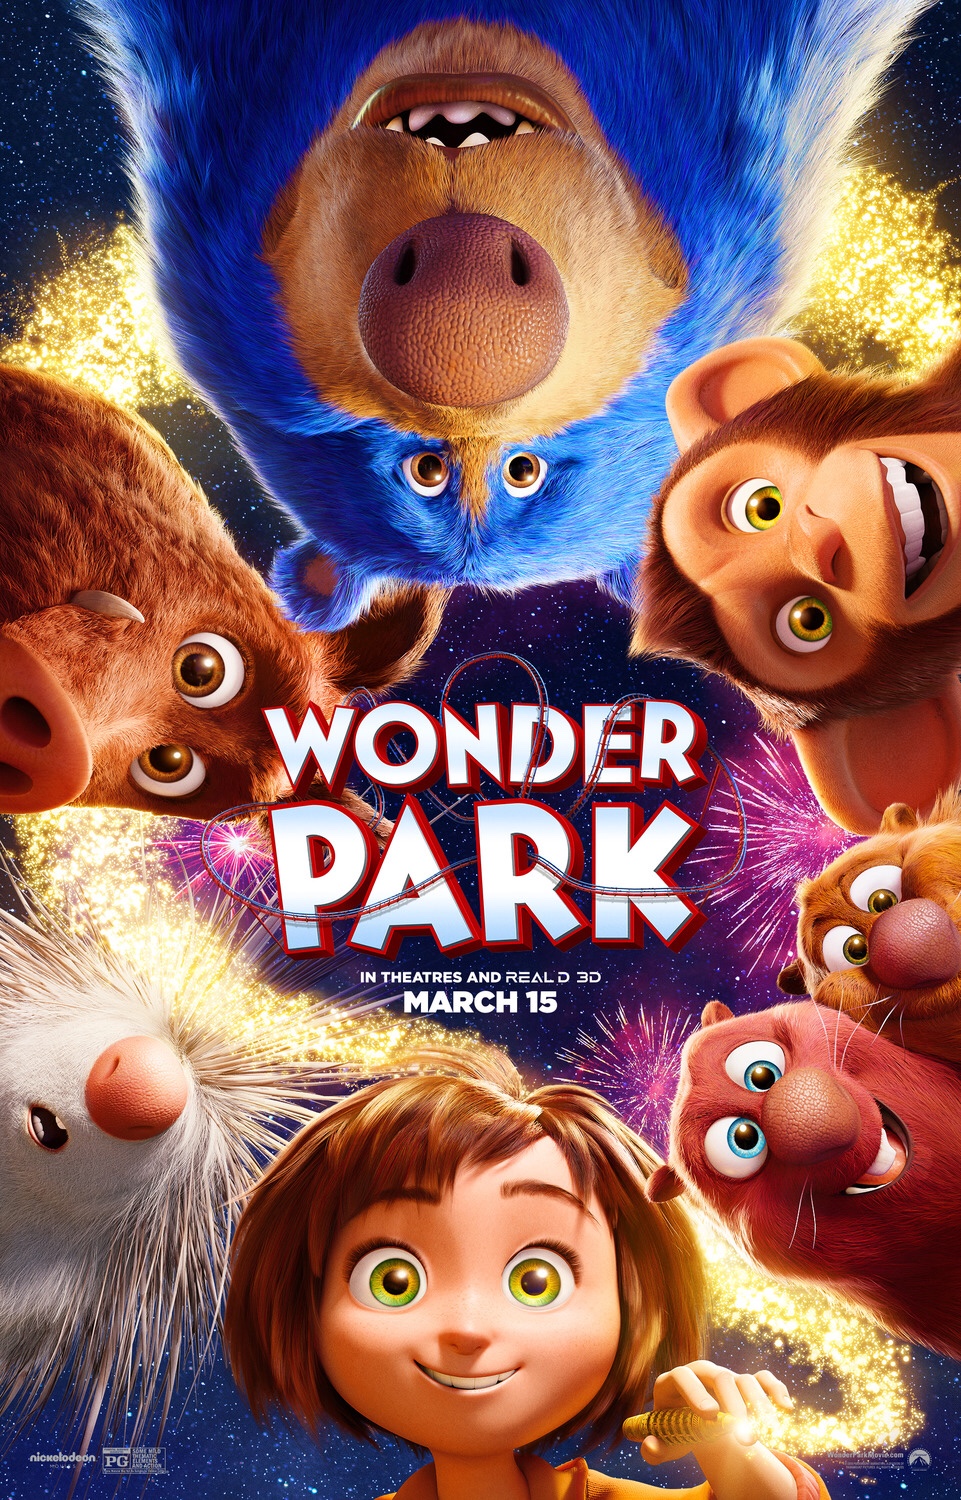 “Wonder Park”: The Failure of STEM Animation